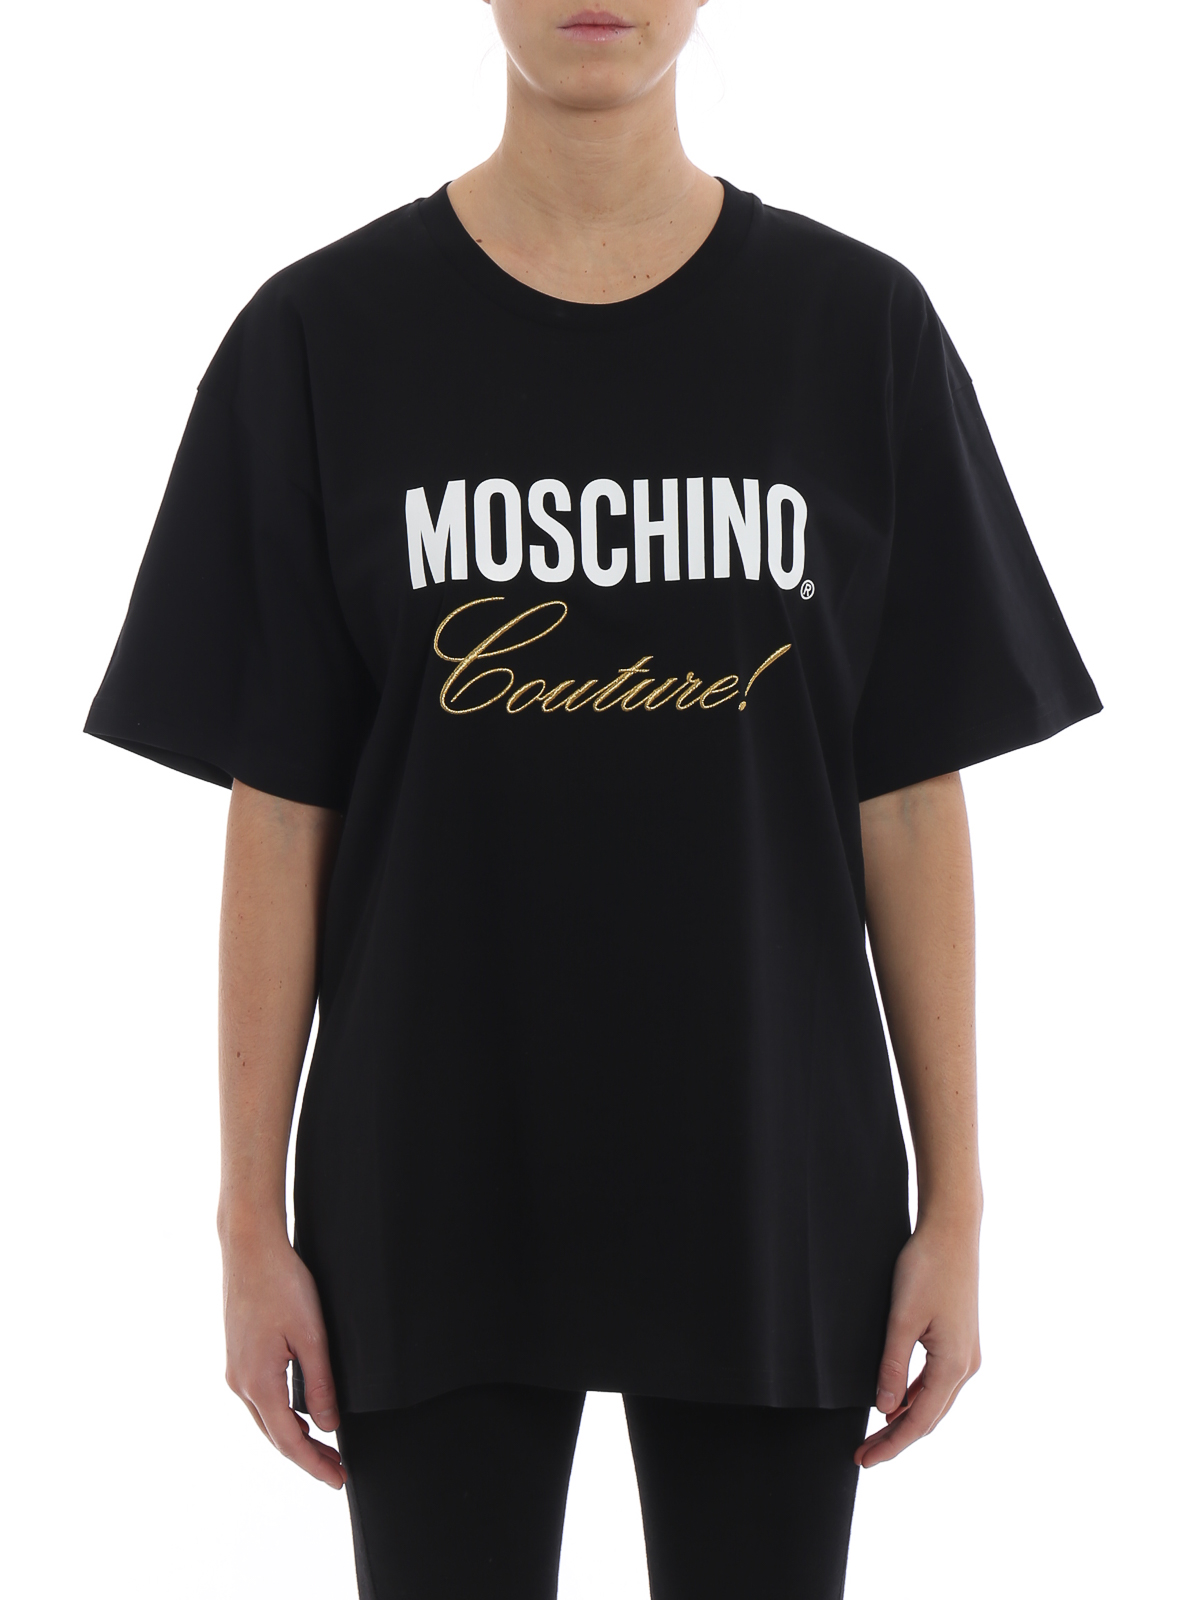 moschino couture shirt